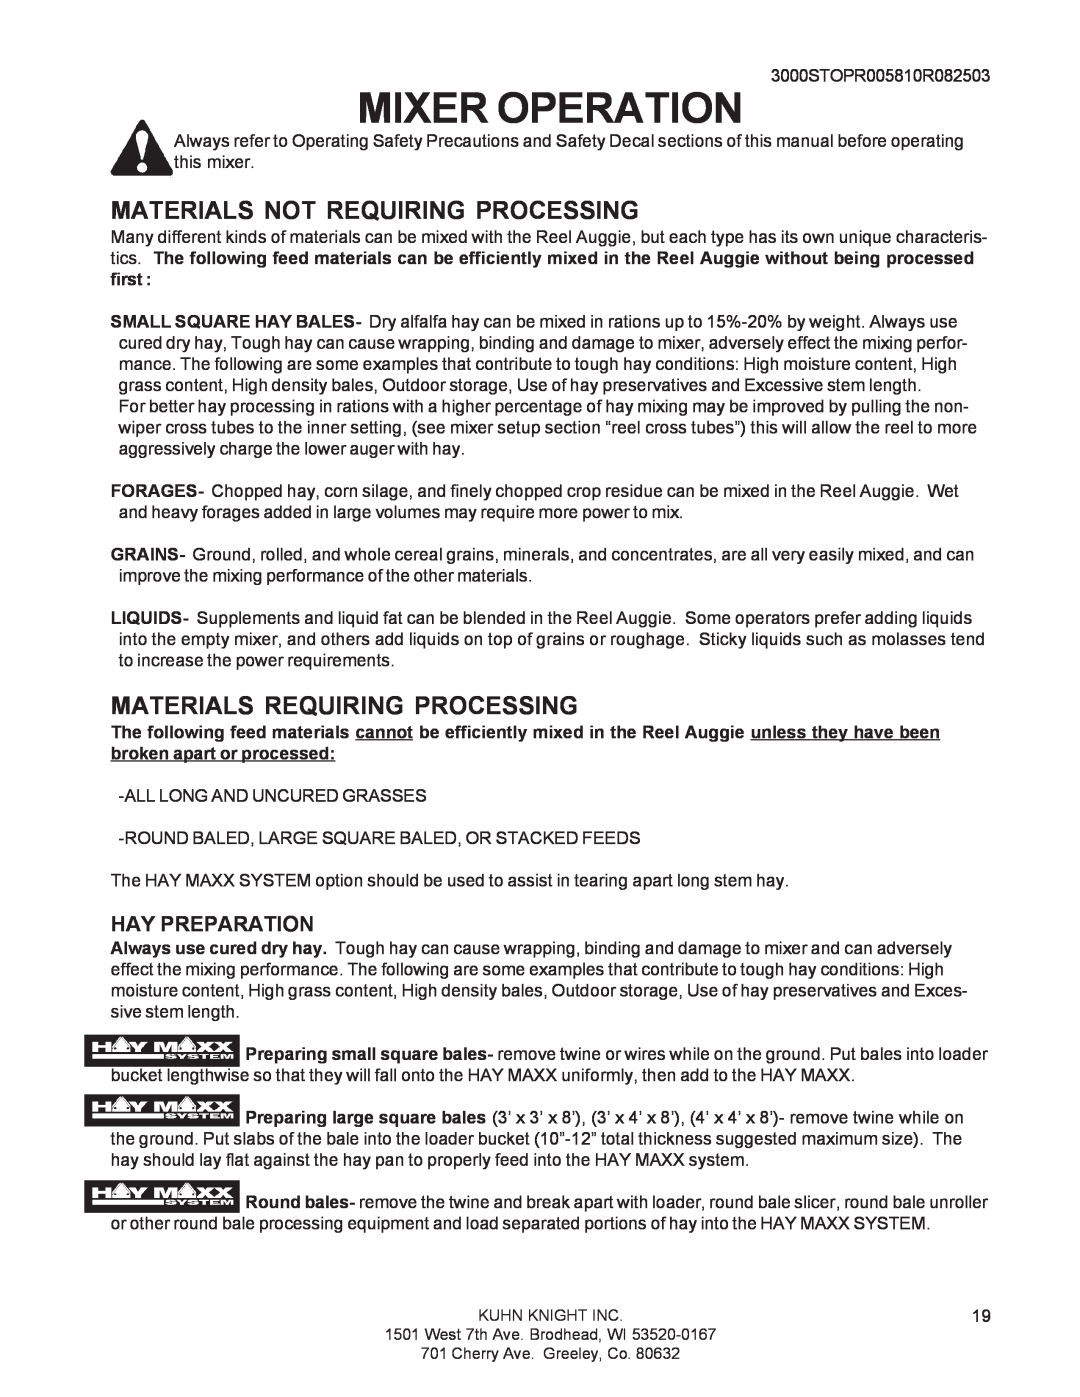 Kuhn Rikon 3030, 3095, 3036, 3025, 3015 Materials Not Requiring Processing, Materials Requiring Processing, Hay Preparation 